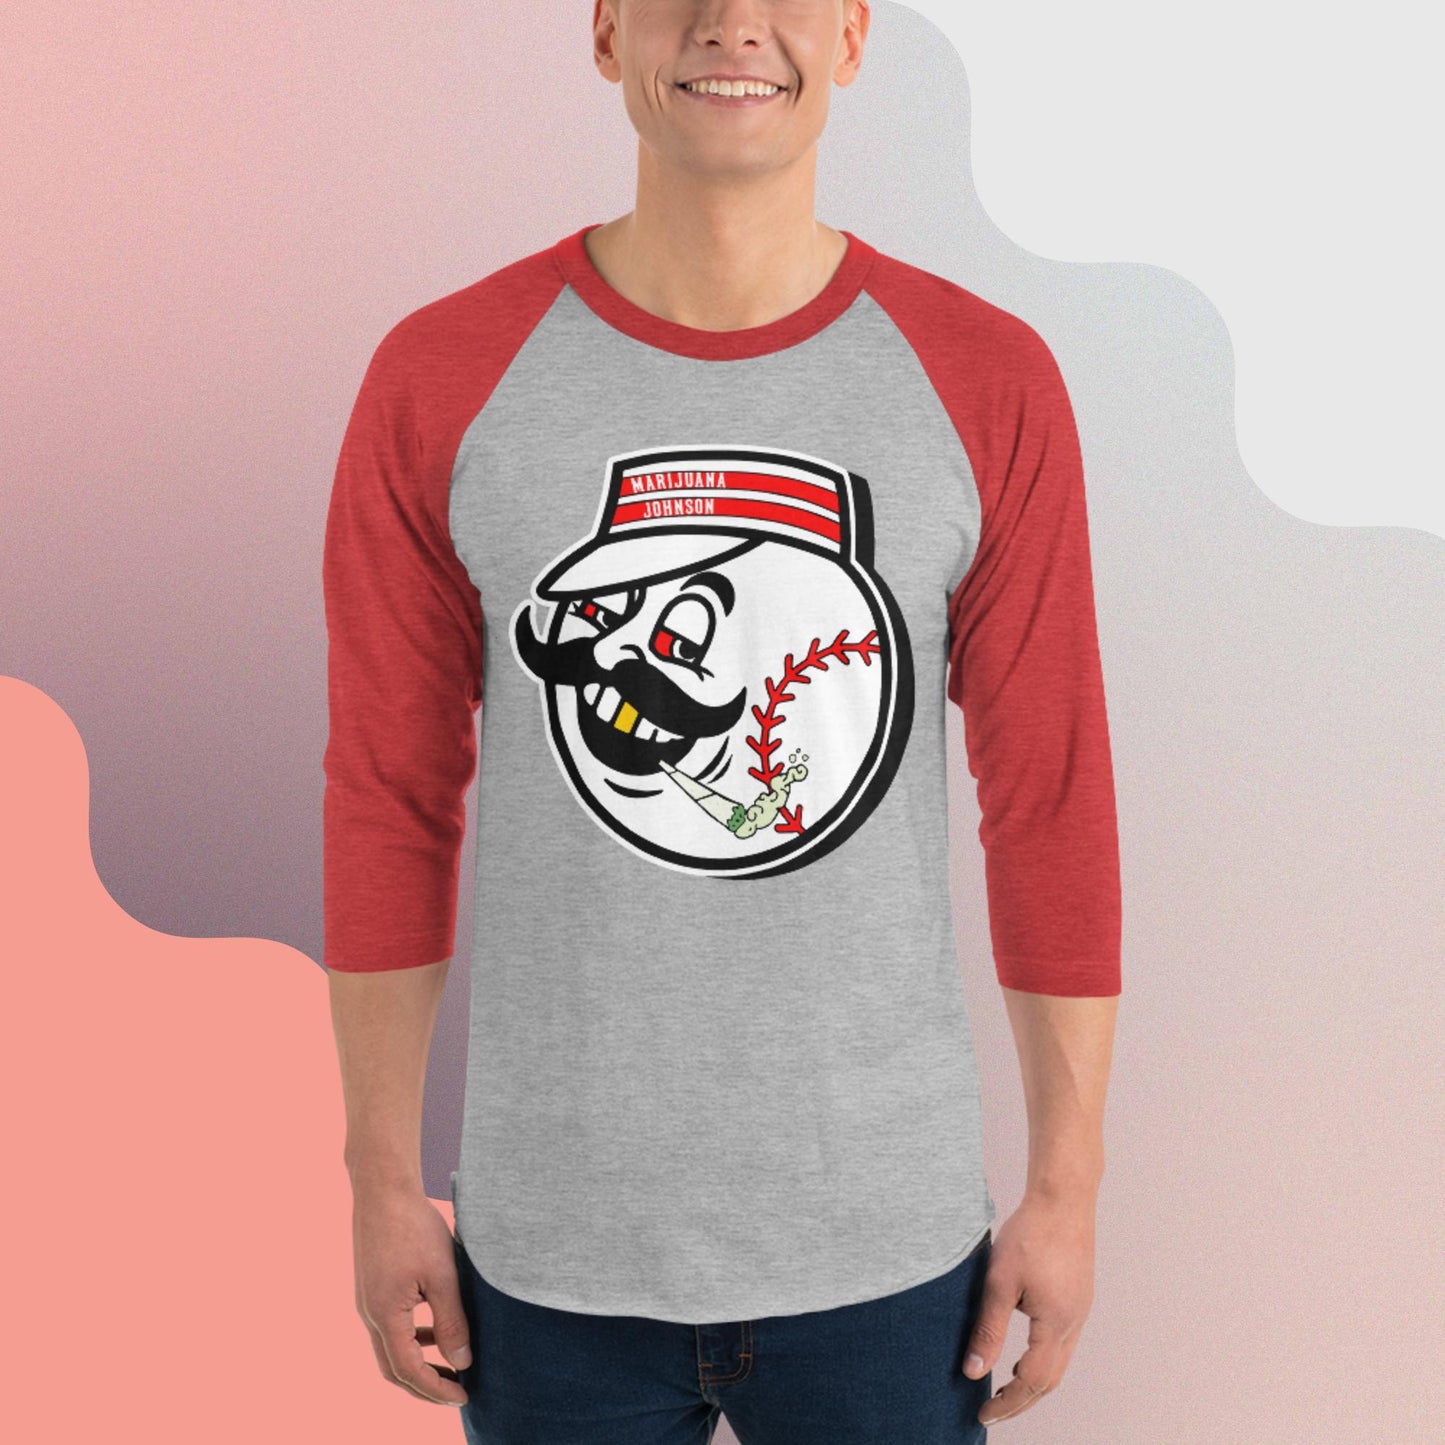 Mr. Redeyes Baseball Shirt